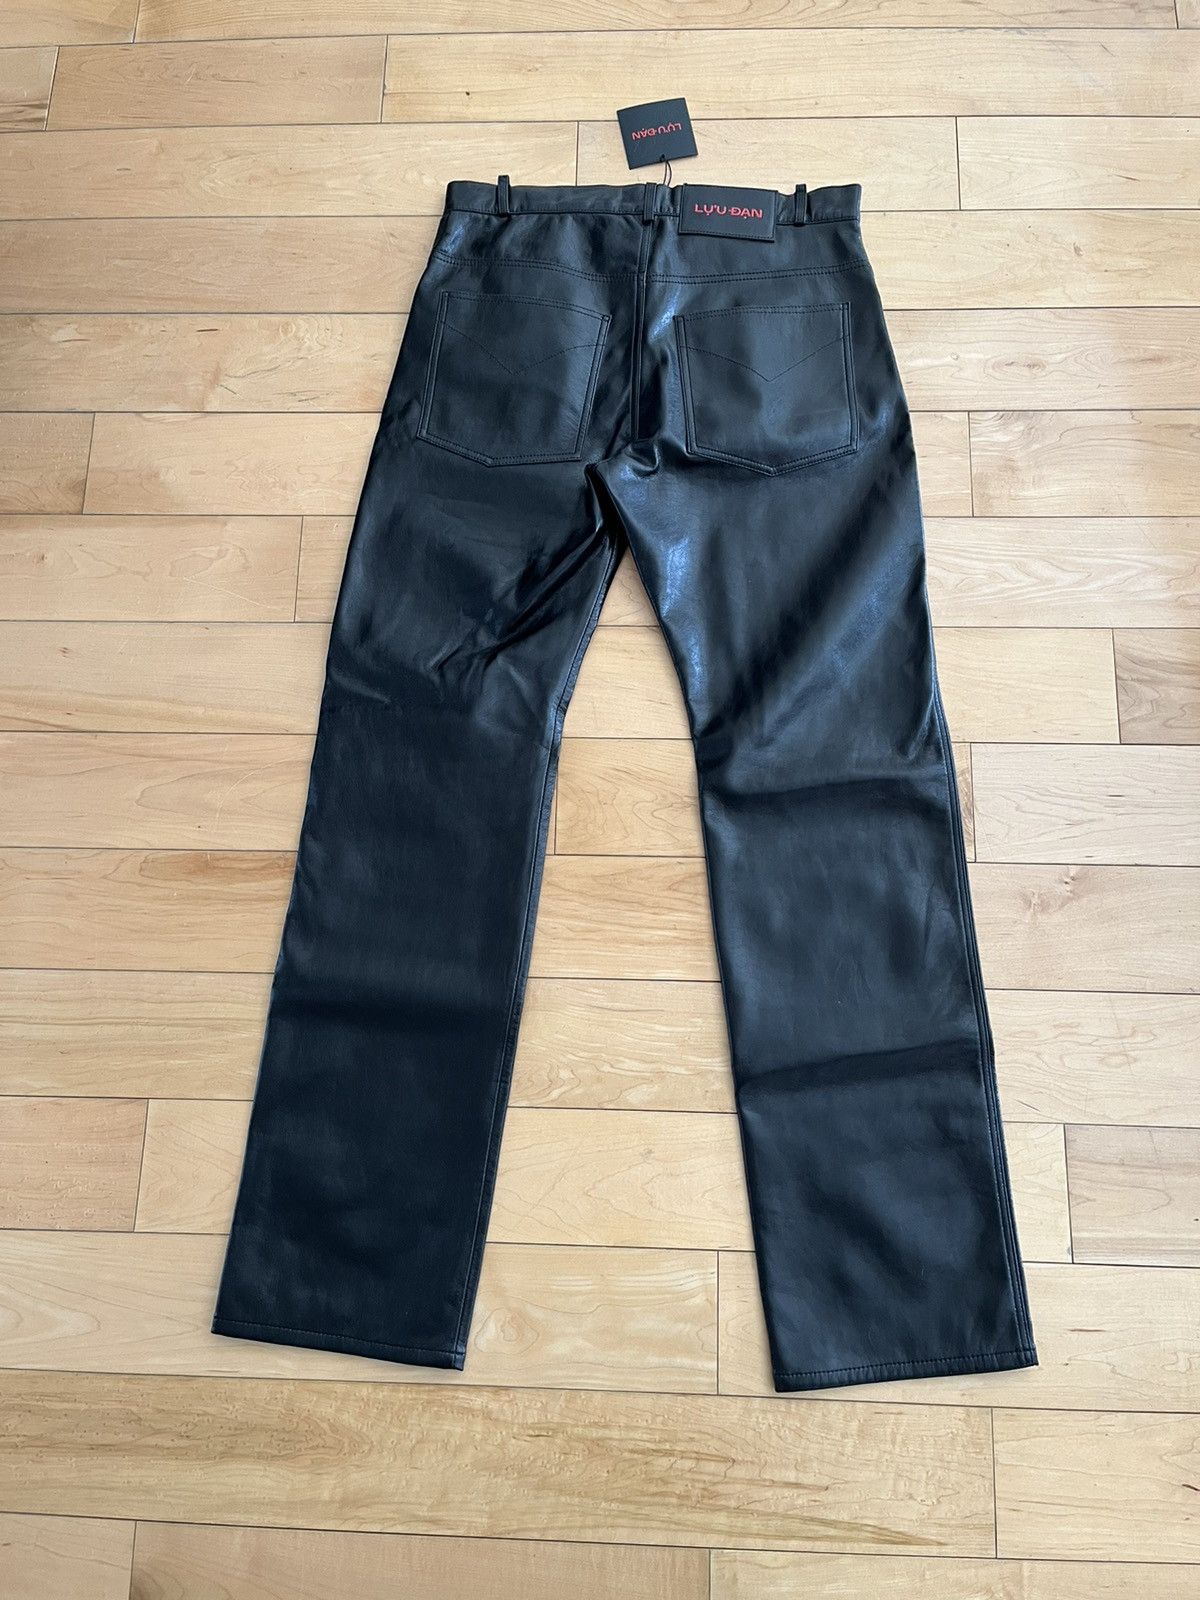 NWT - Luu Dan Vegan Leather Trousers - 2